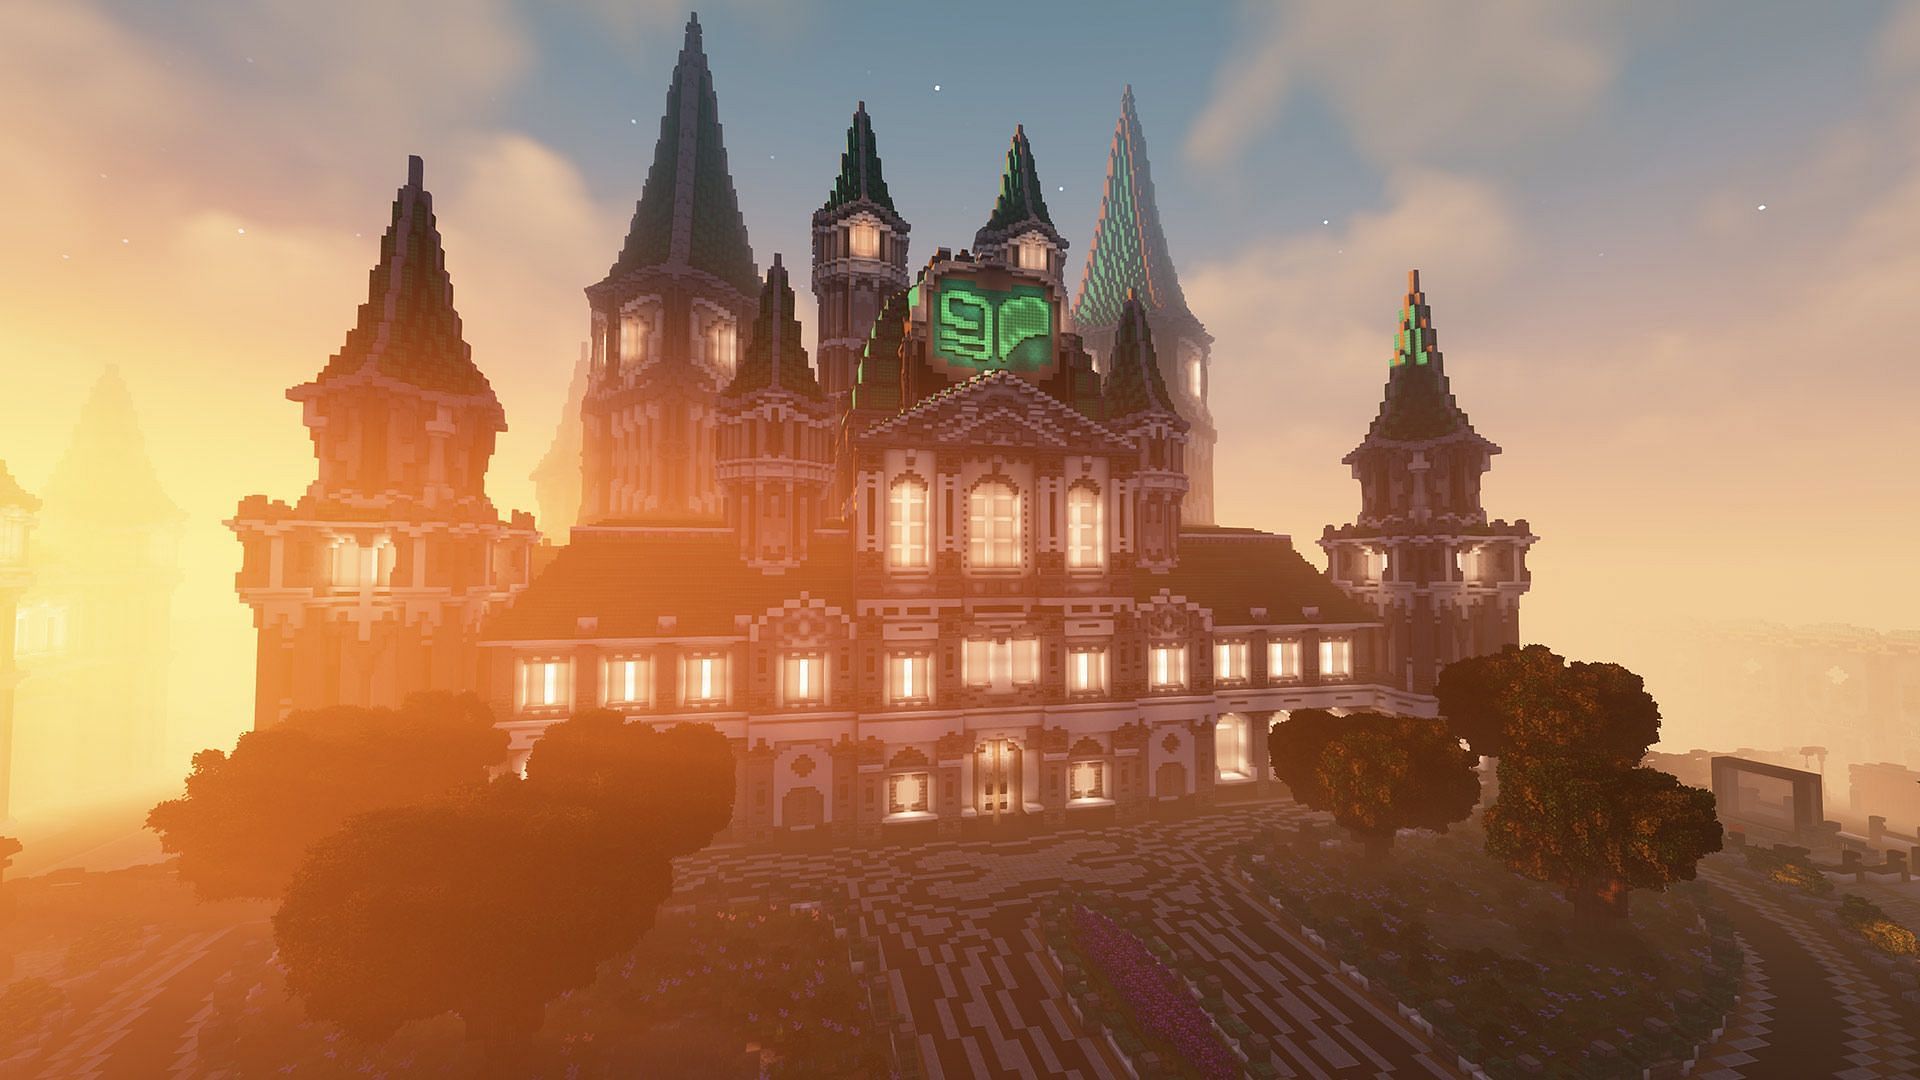 Best Minecraft Castle Ideas: 45 Castle Designs to Build in 2022